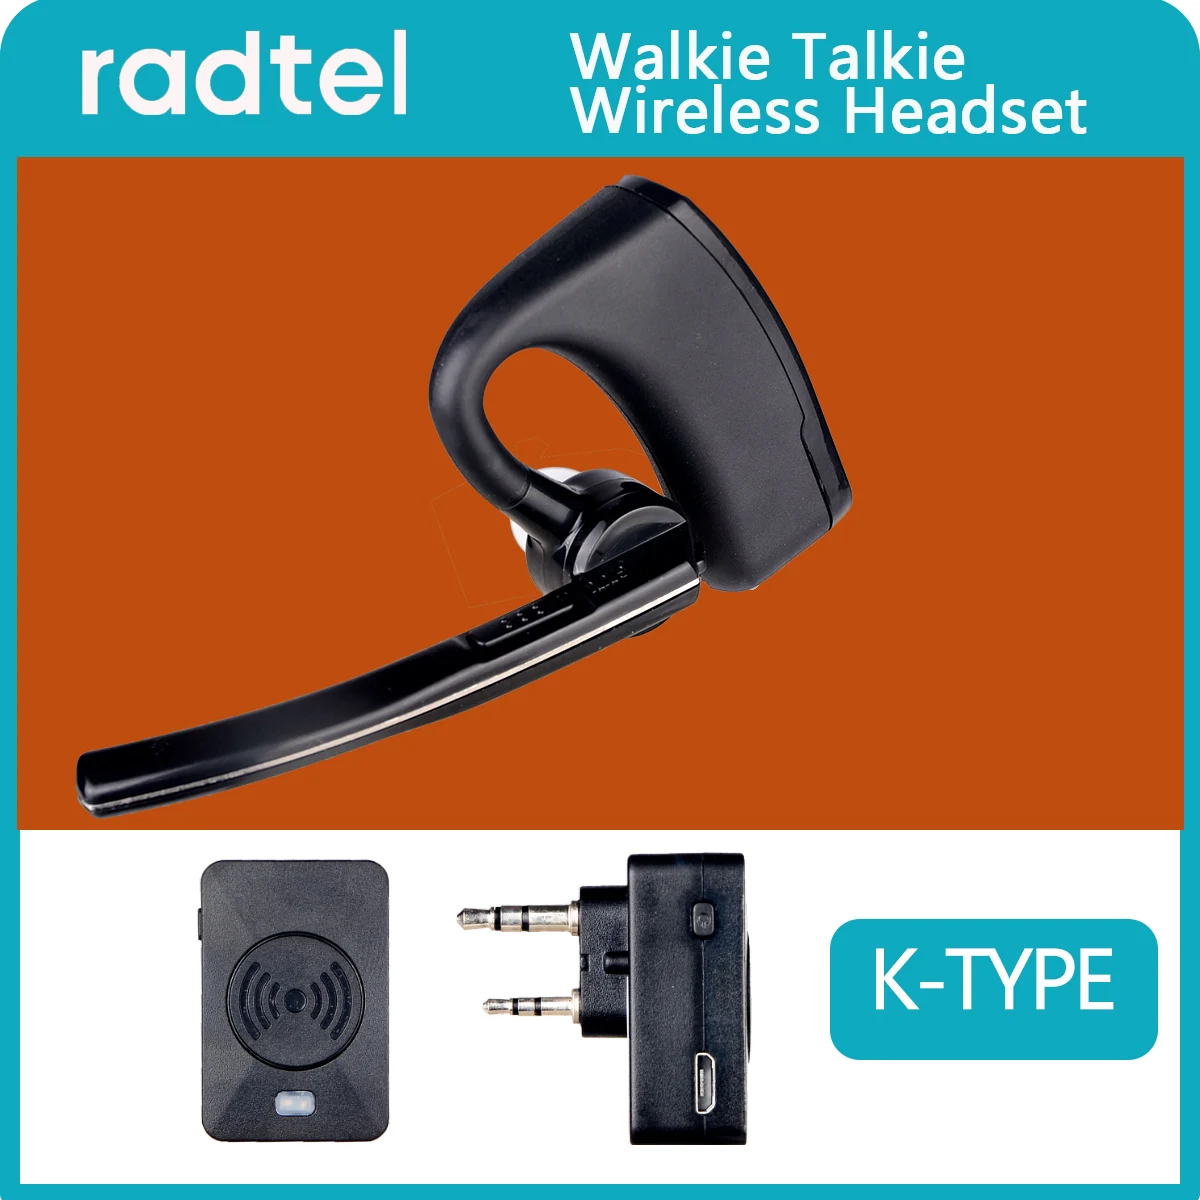 

Walkie talkie Bluetooth-Compatible Headset Handsfree PTT Earpiece Headphone for Radtel RT-470X RT-830 RT-890 RT-470